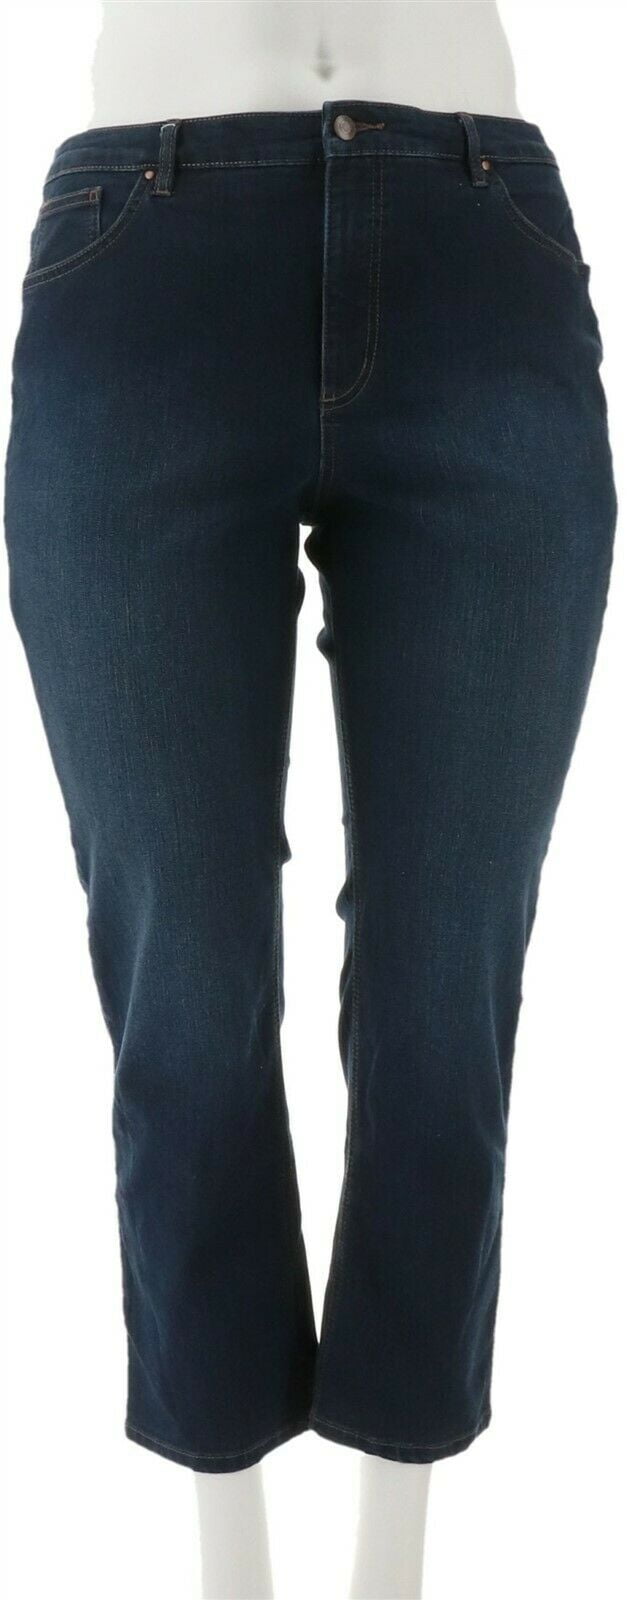 the denim company jeans